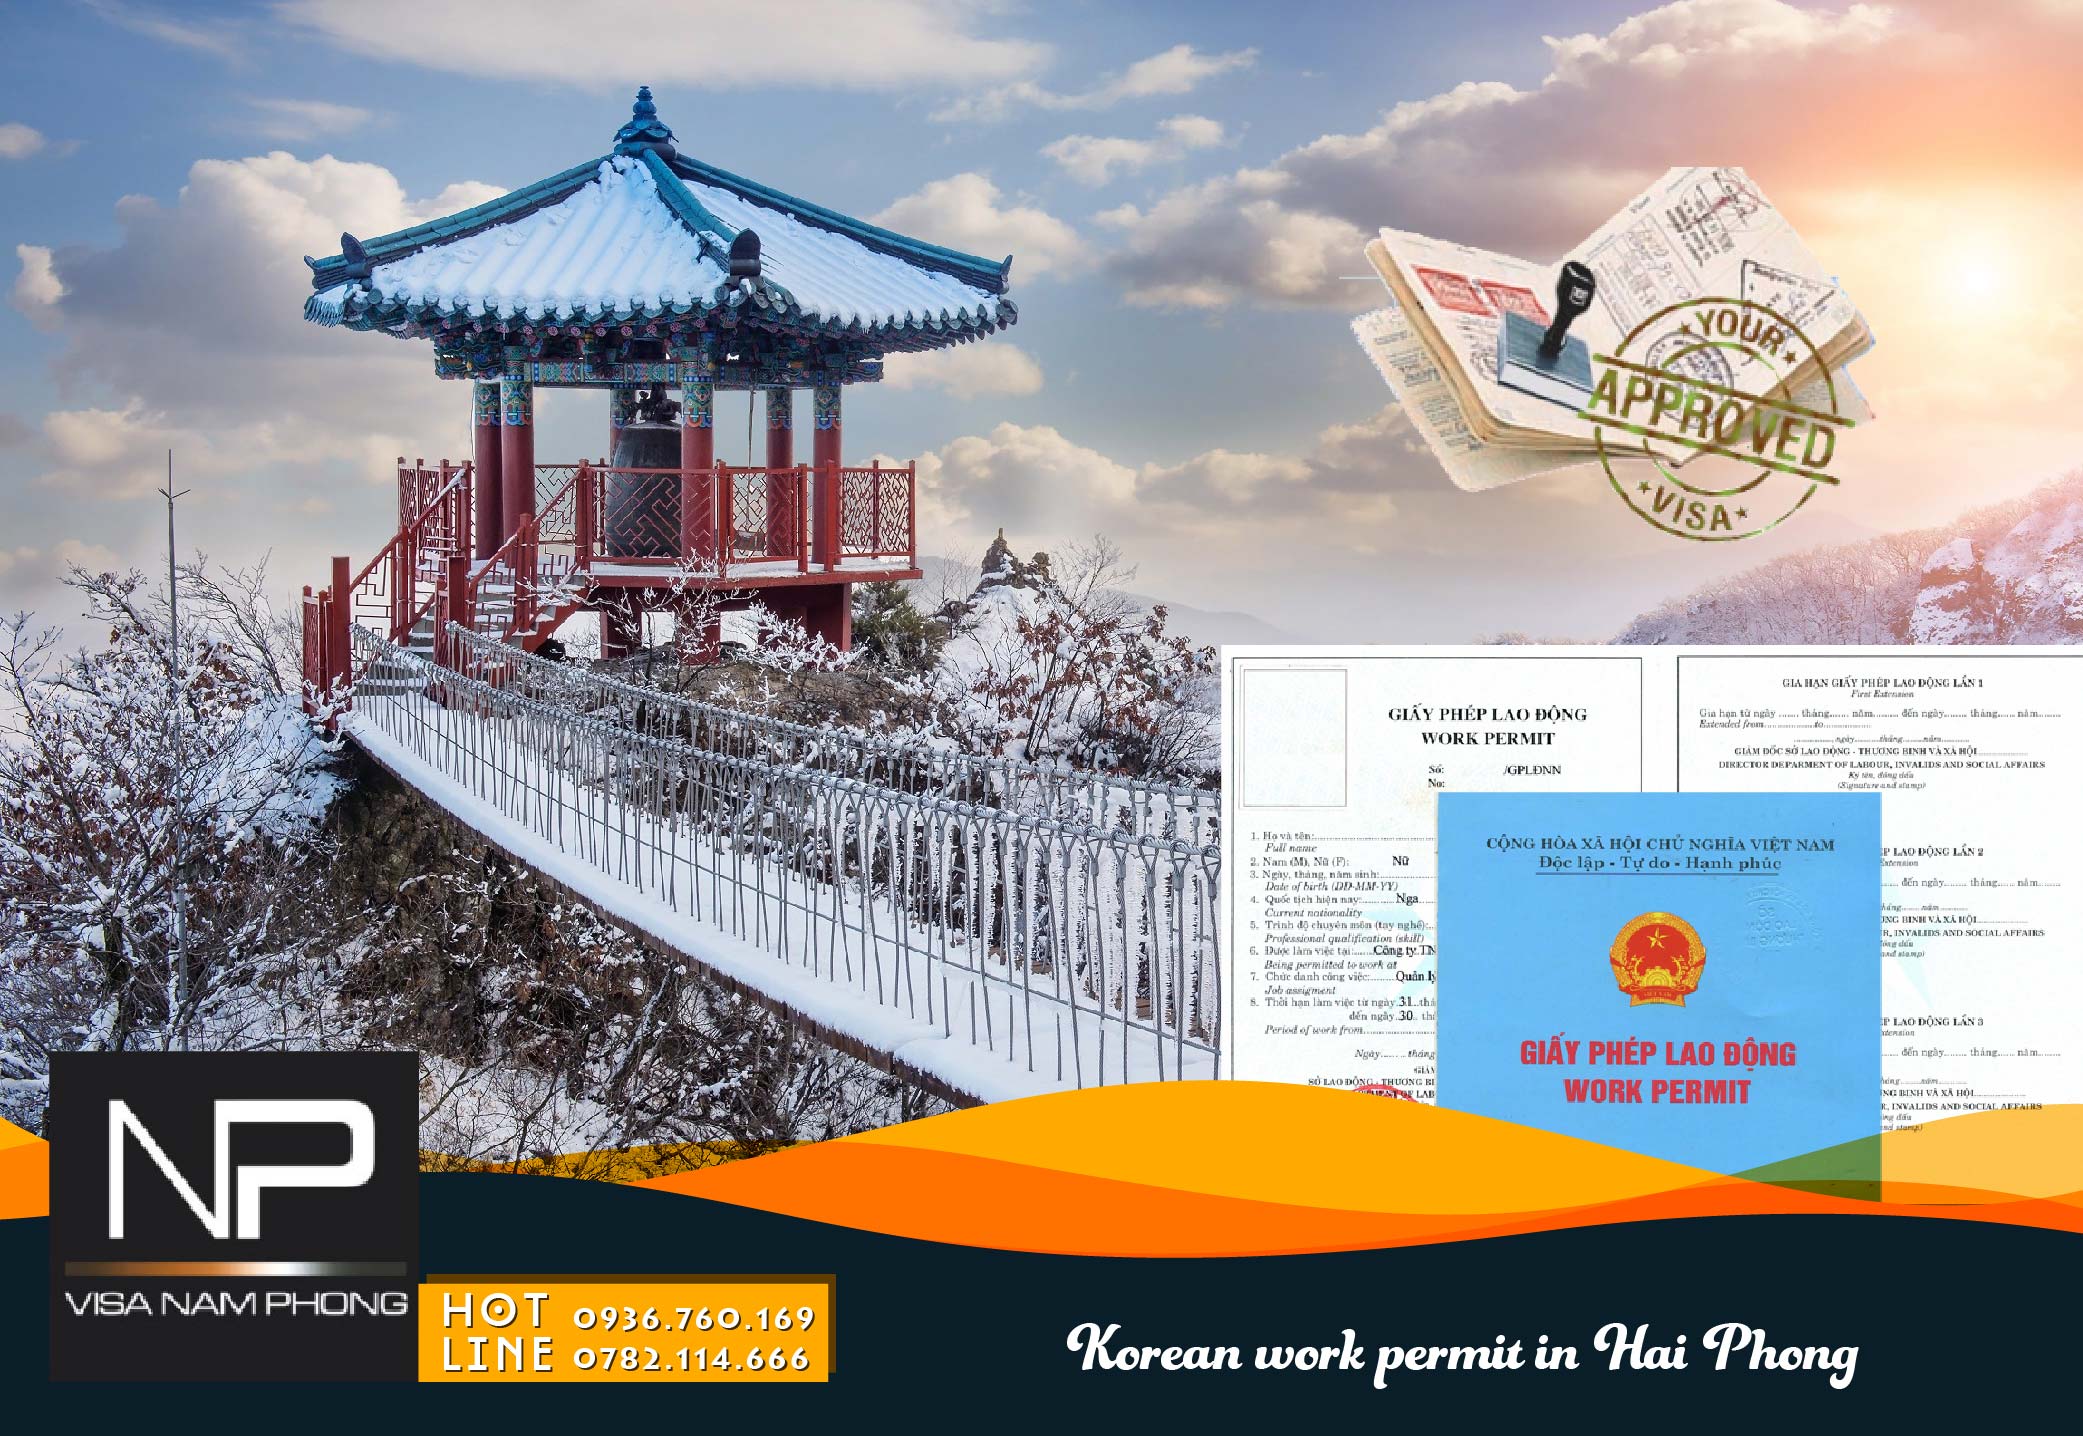 Korean work permit in Hai Phong